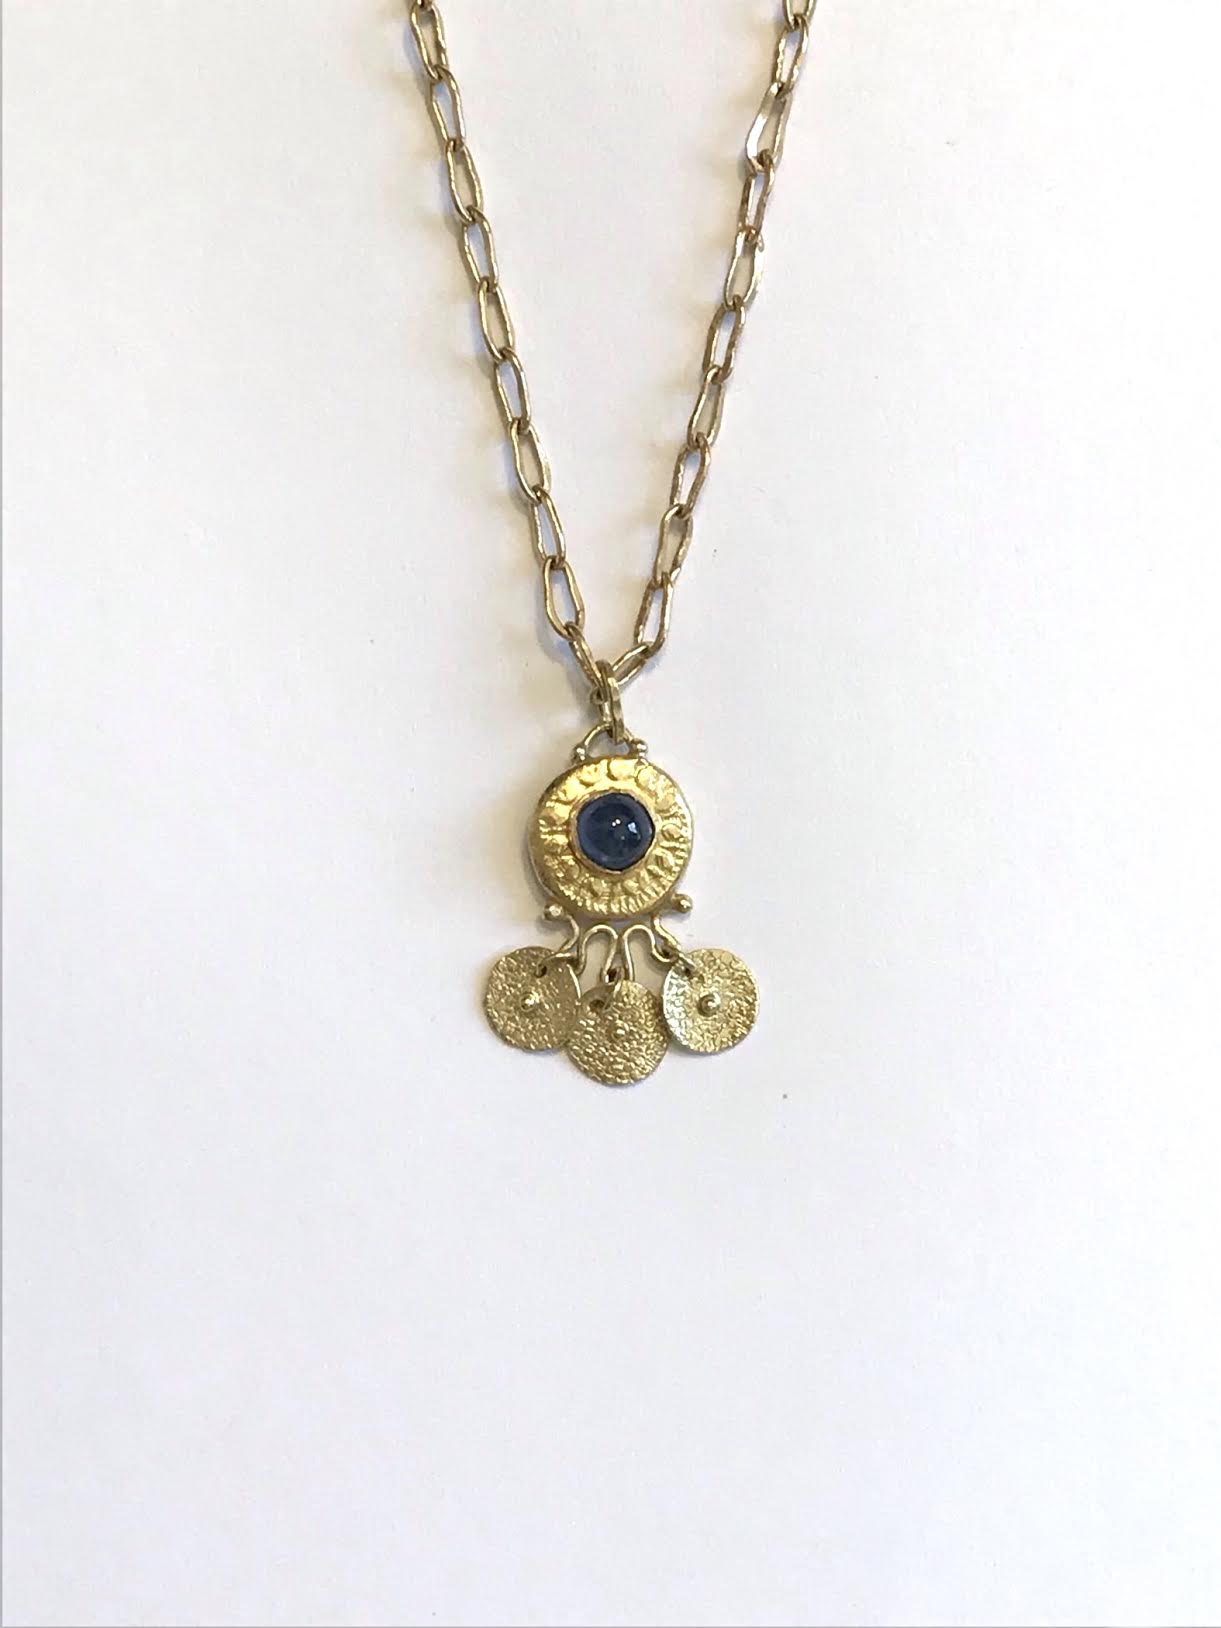 ancient style gold necklace18k pendant 7/8